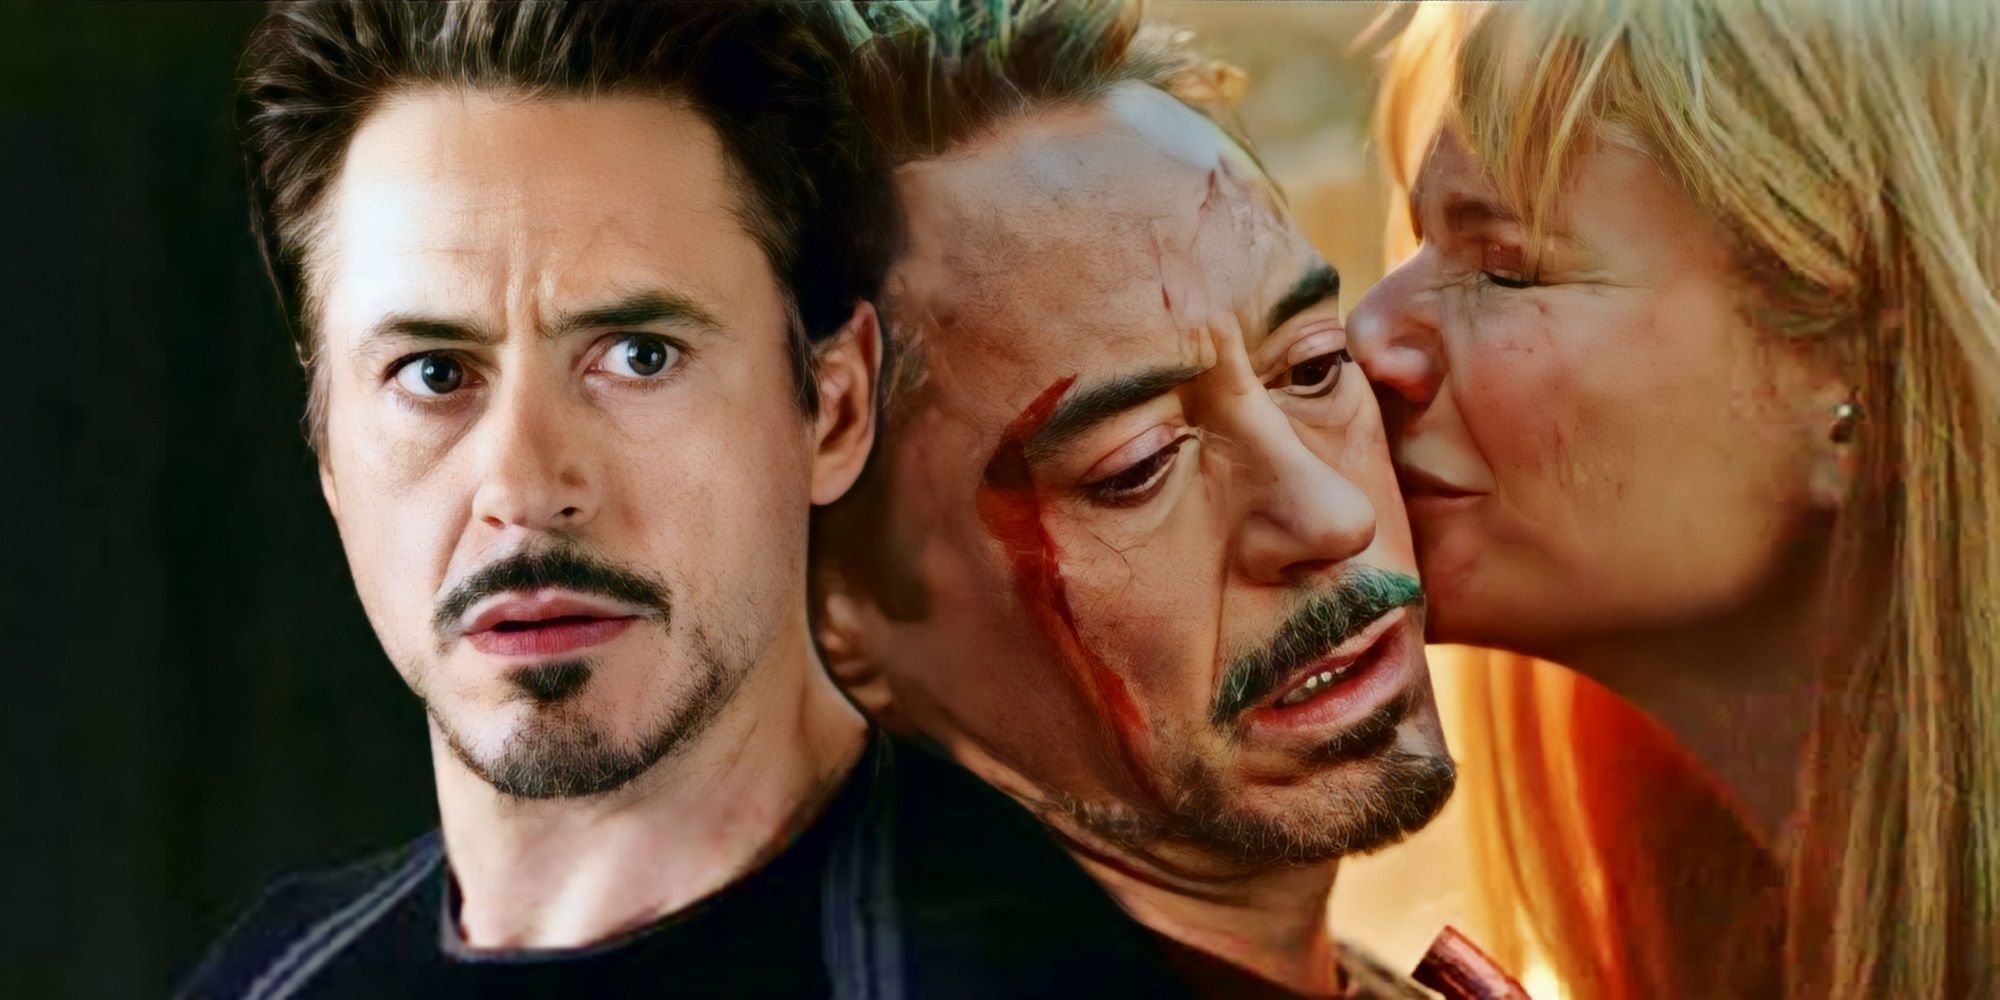 Robert Downey Jr. as Tony Stark/Iron Man in Avengers and Gwyneth Paltrow as Pepper Potts